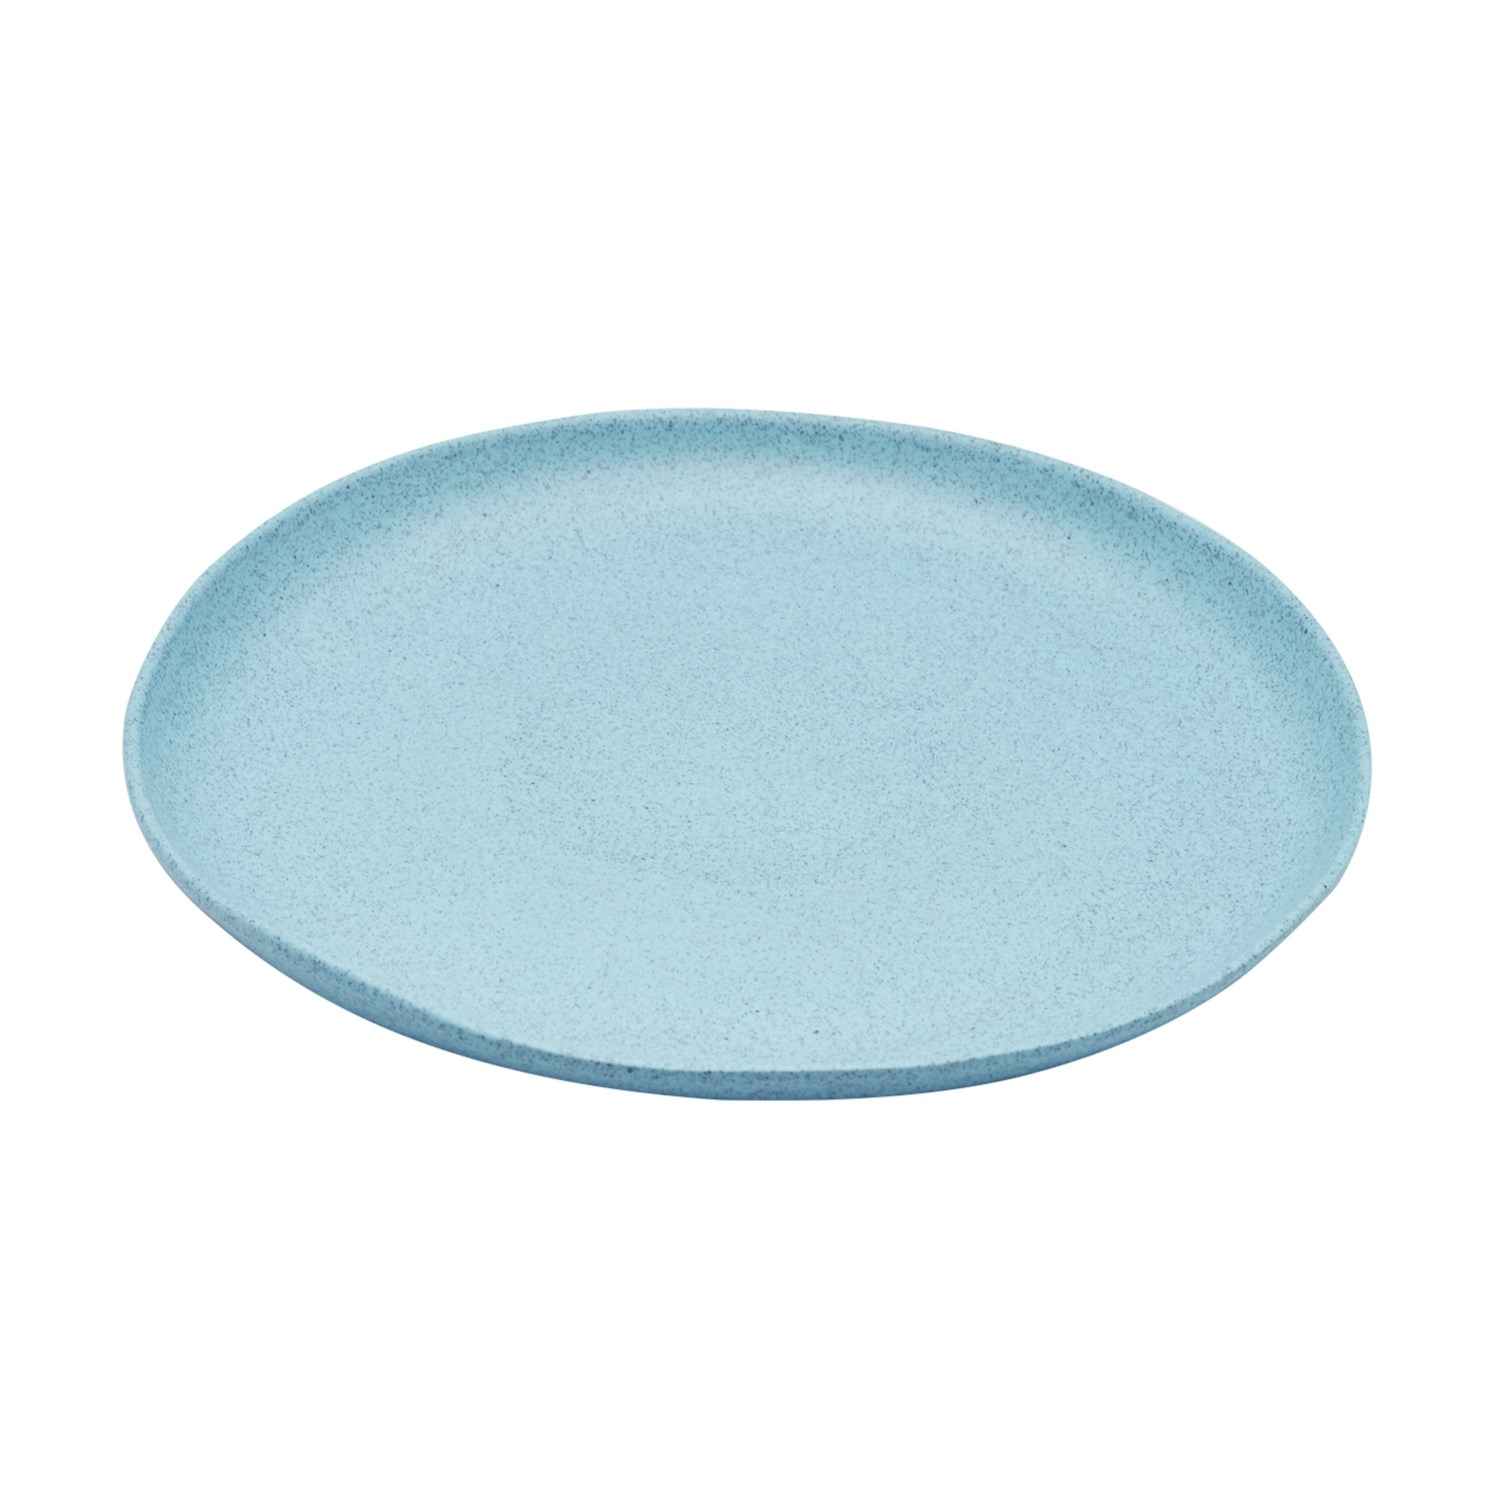 Dinewell Melamine Dinner Plate Blue Speckle